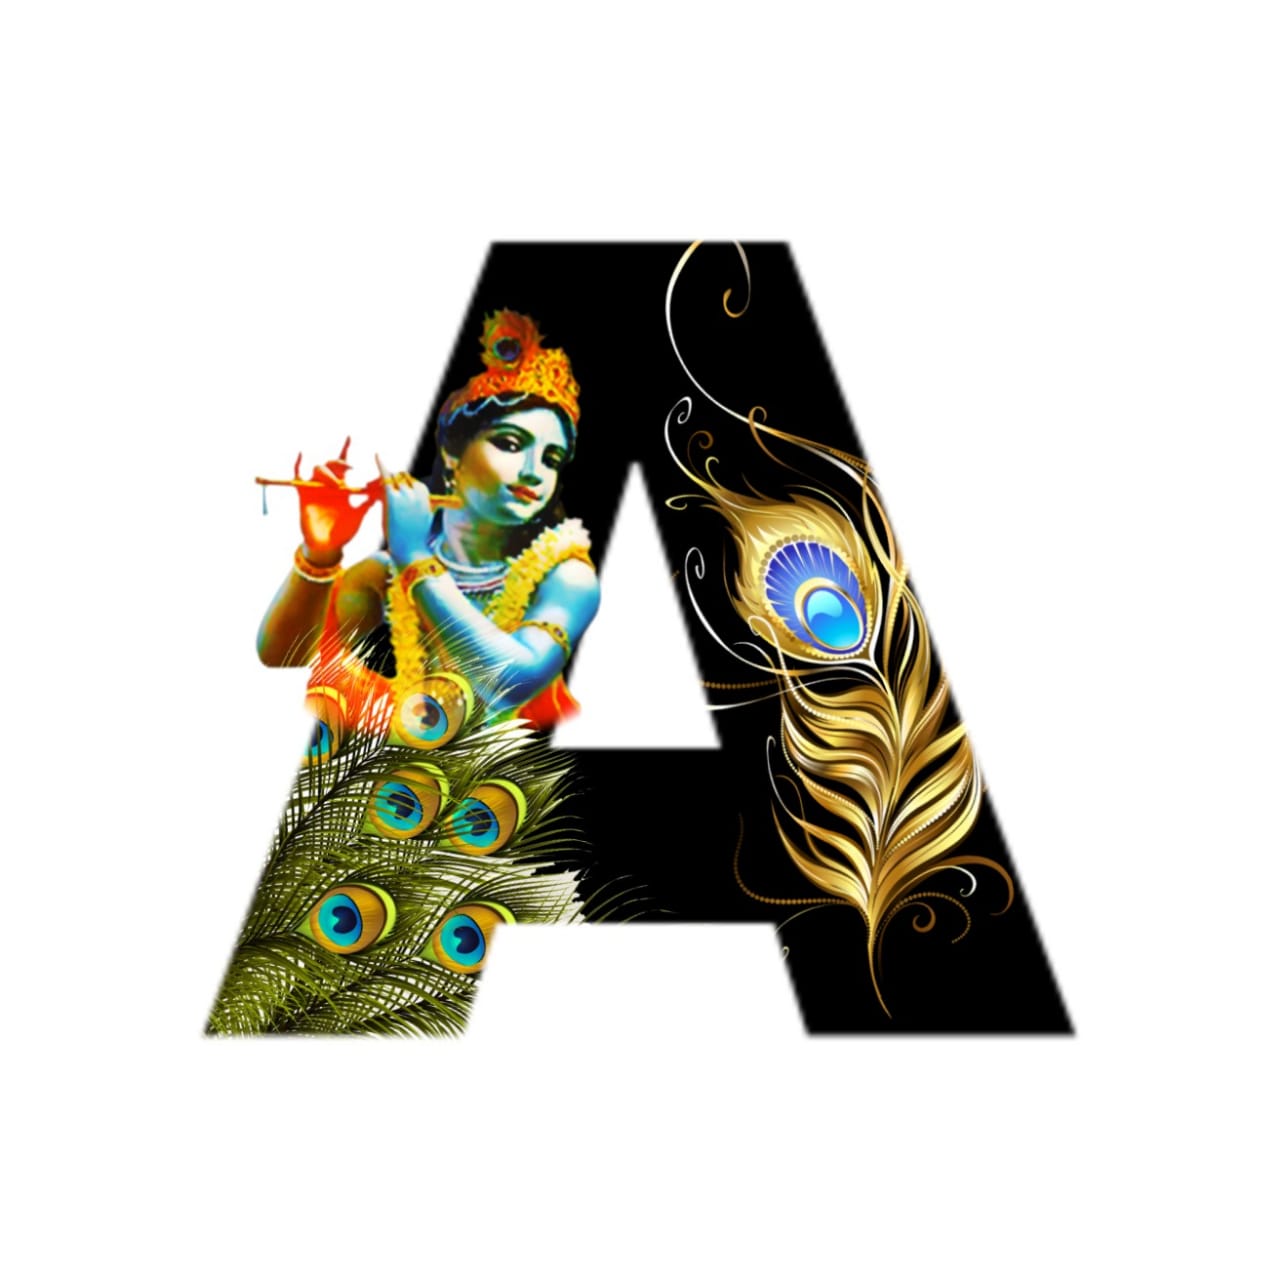 English Alphabets with Lord Krishna Image